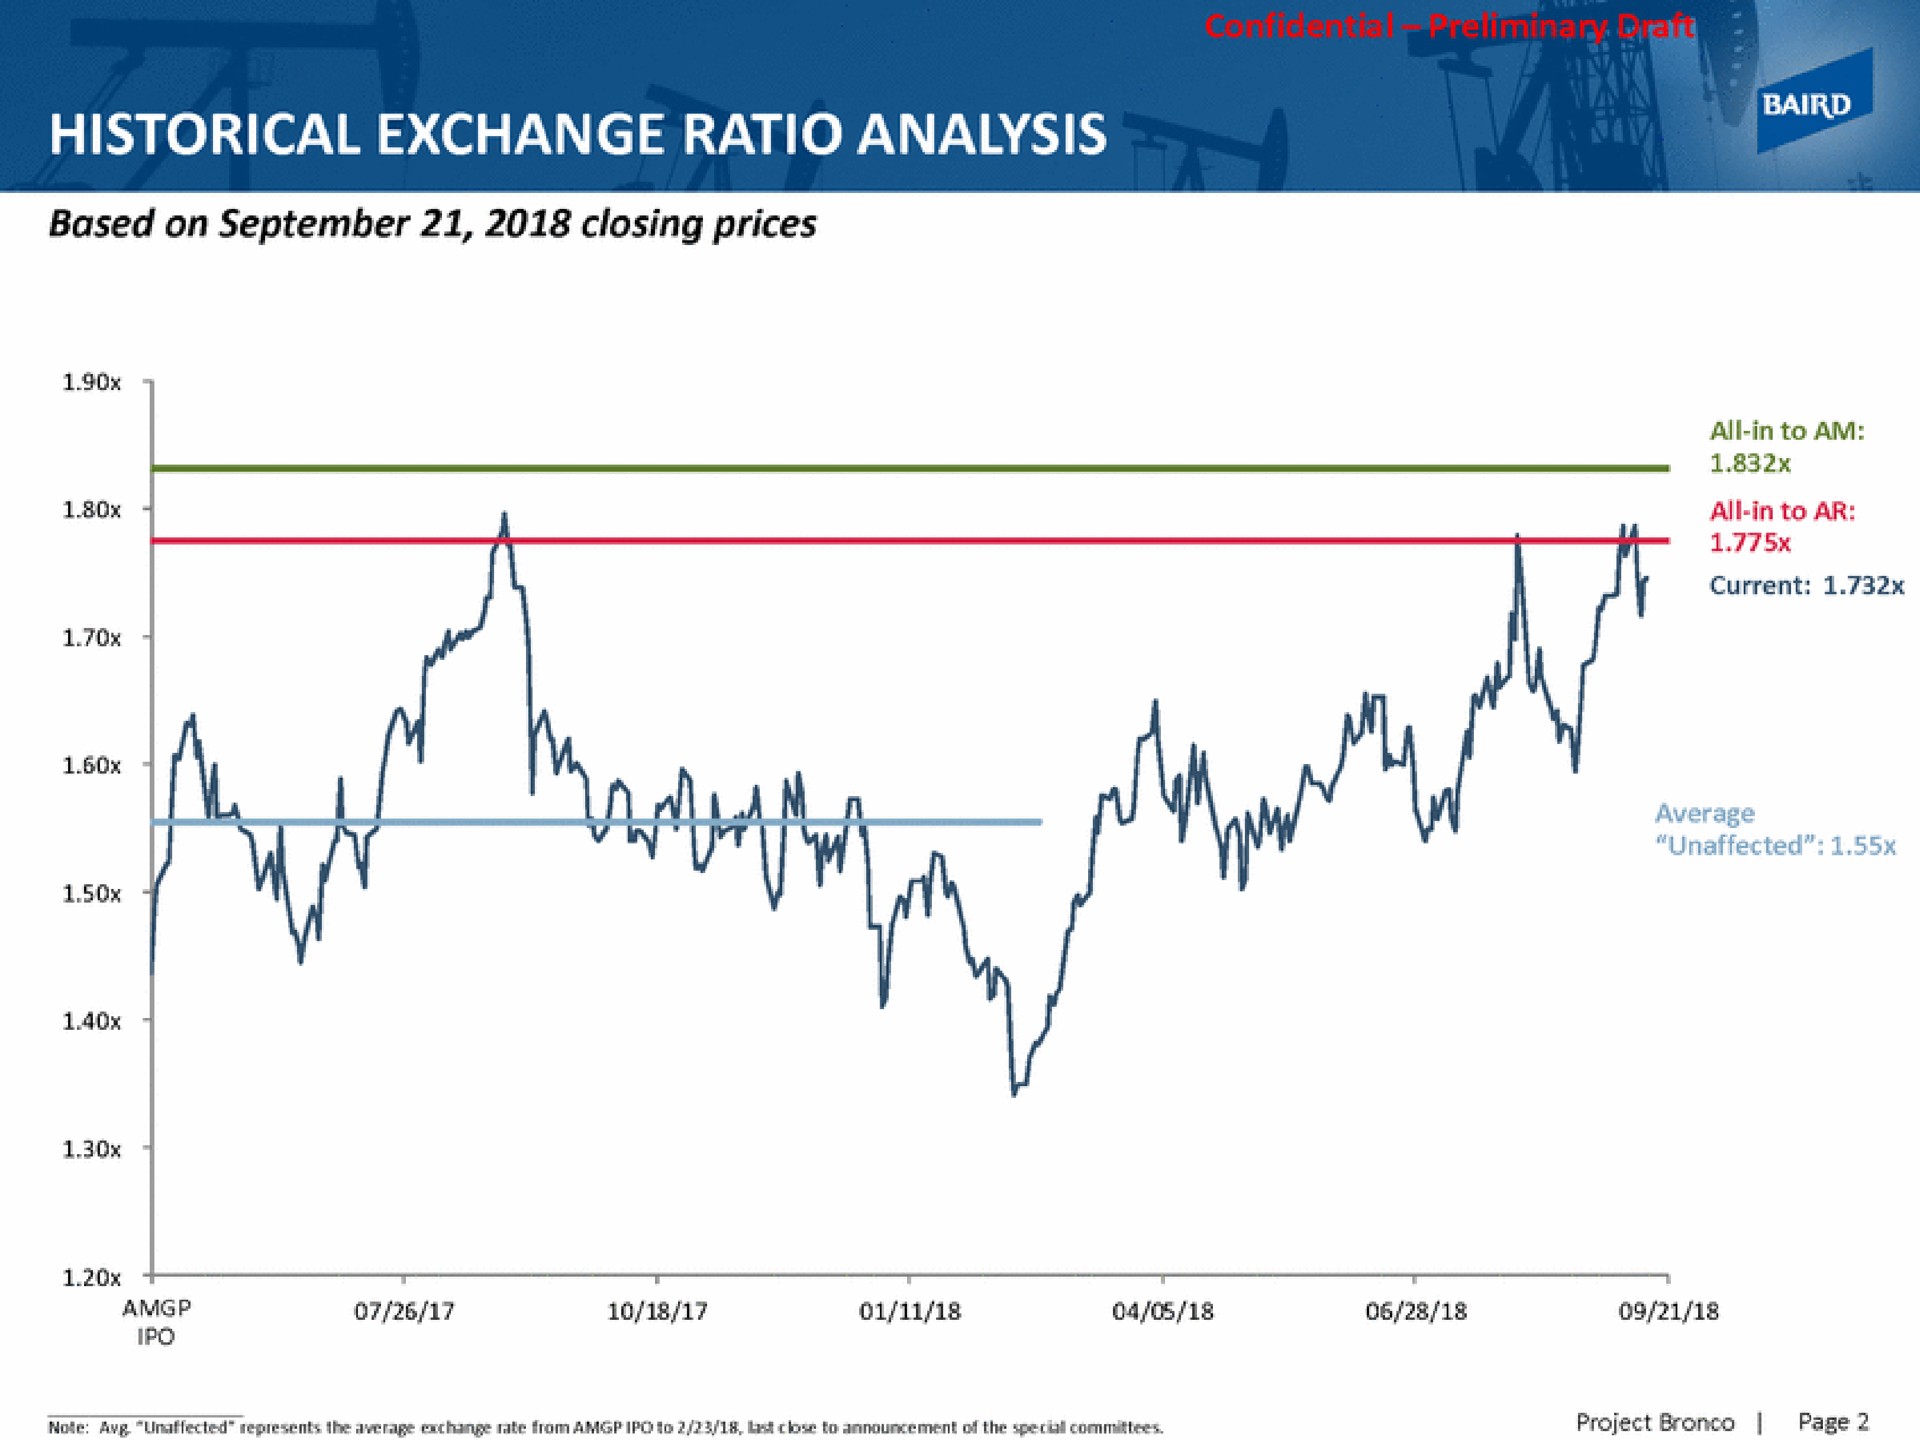 historical exchange ratio analysis based on closing prices | Baird